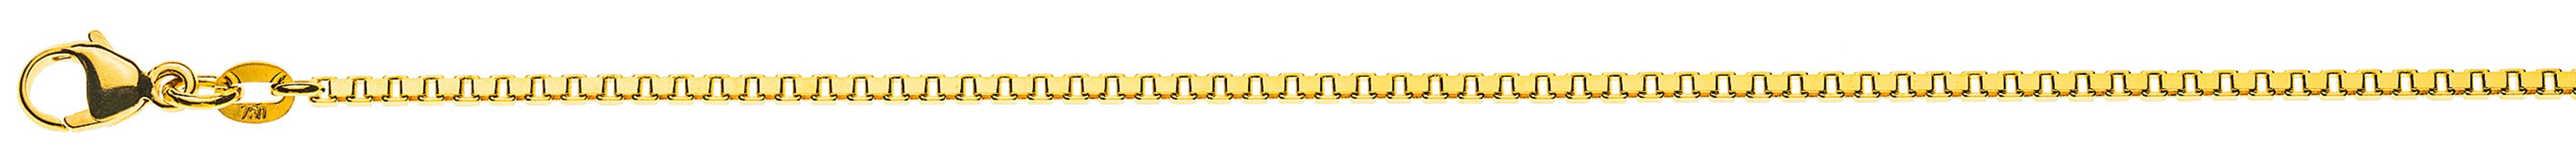 AURONOS Prestige Necklace yellow gold 18K Venetian chain diamond 42cm 1.6mm